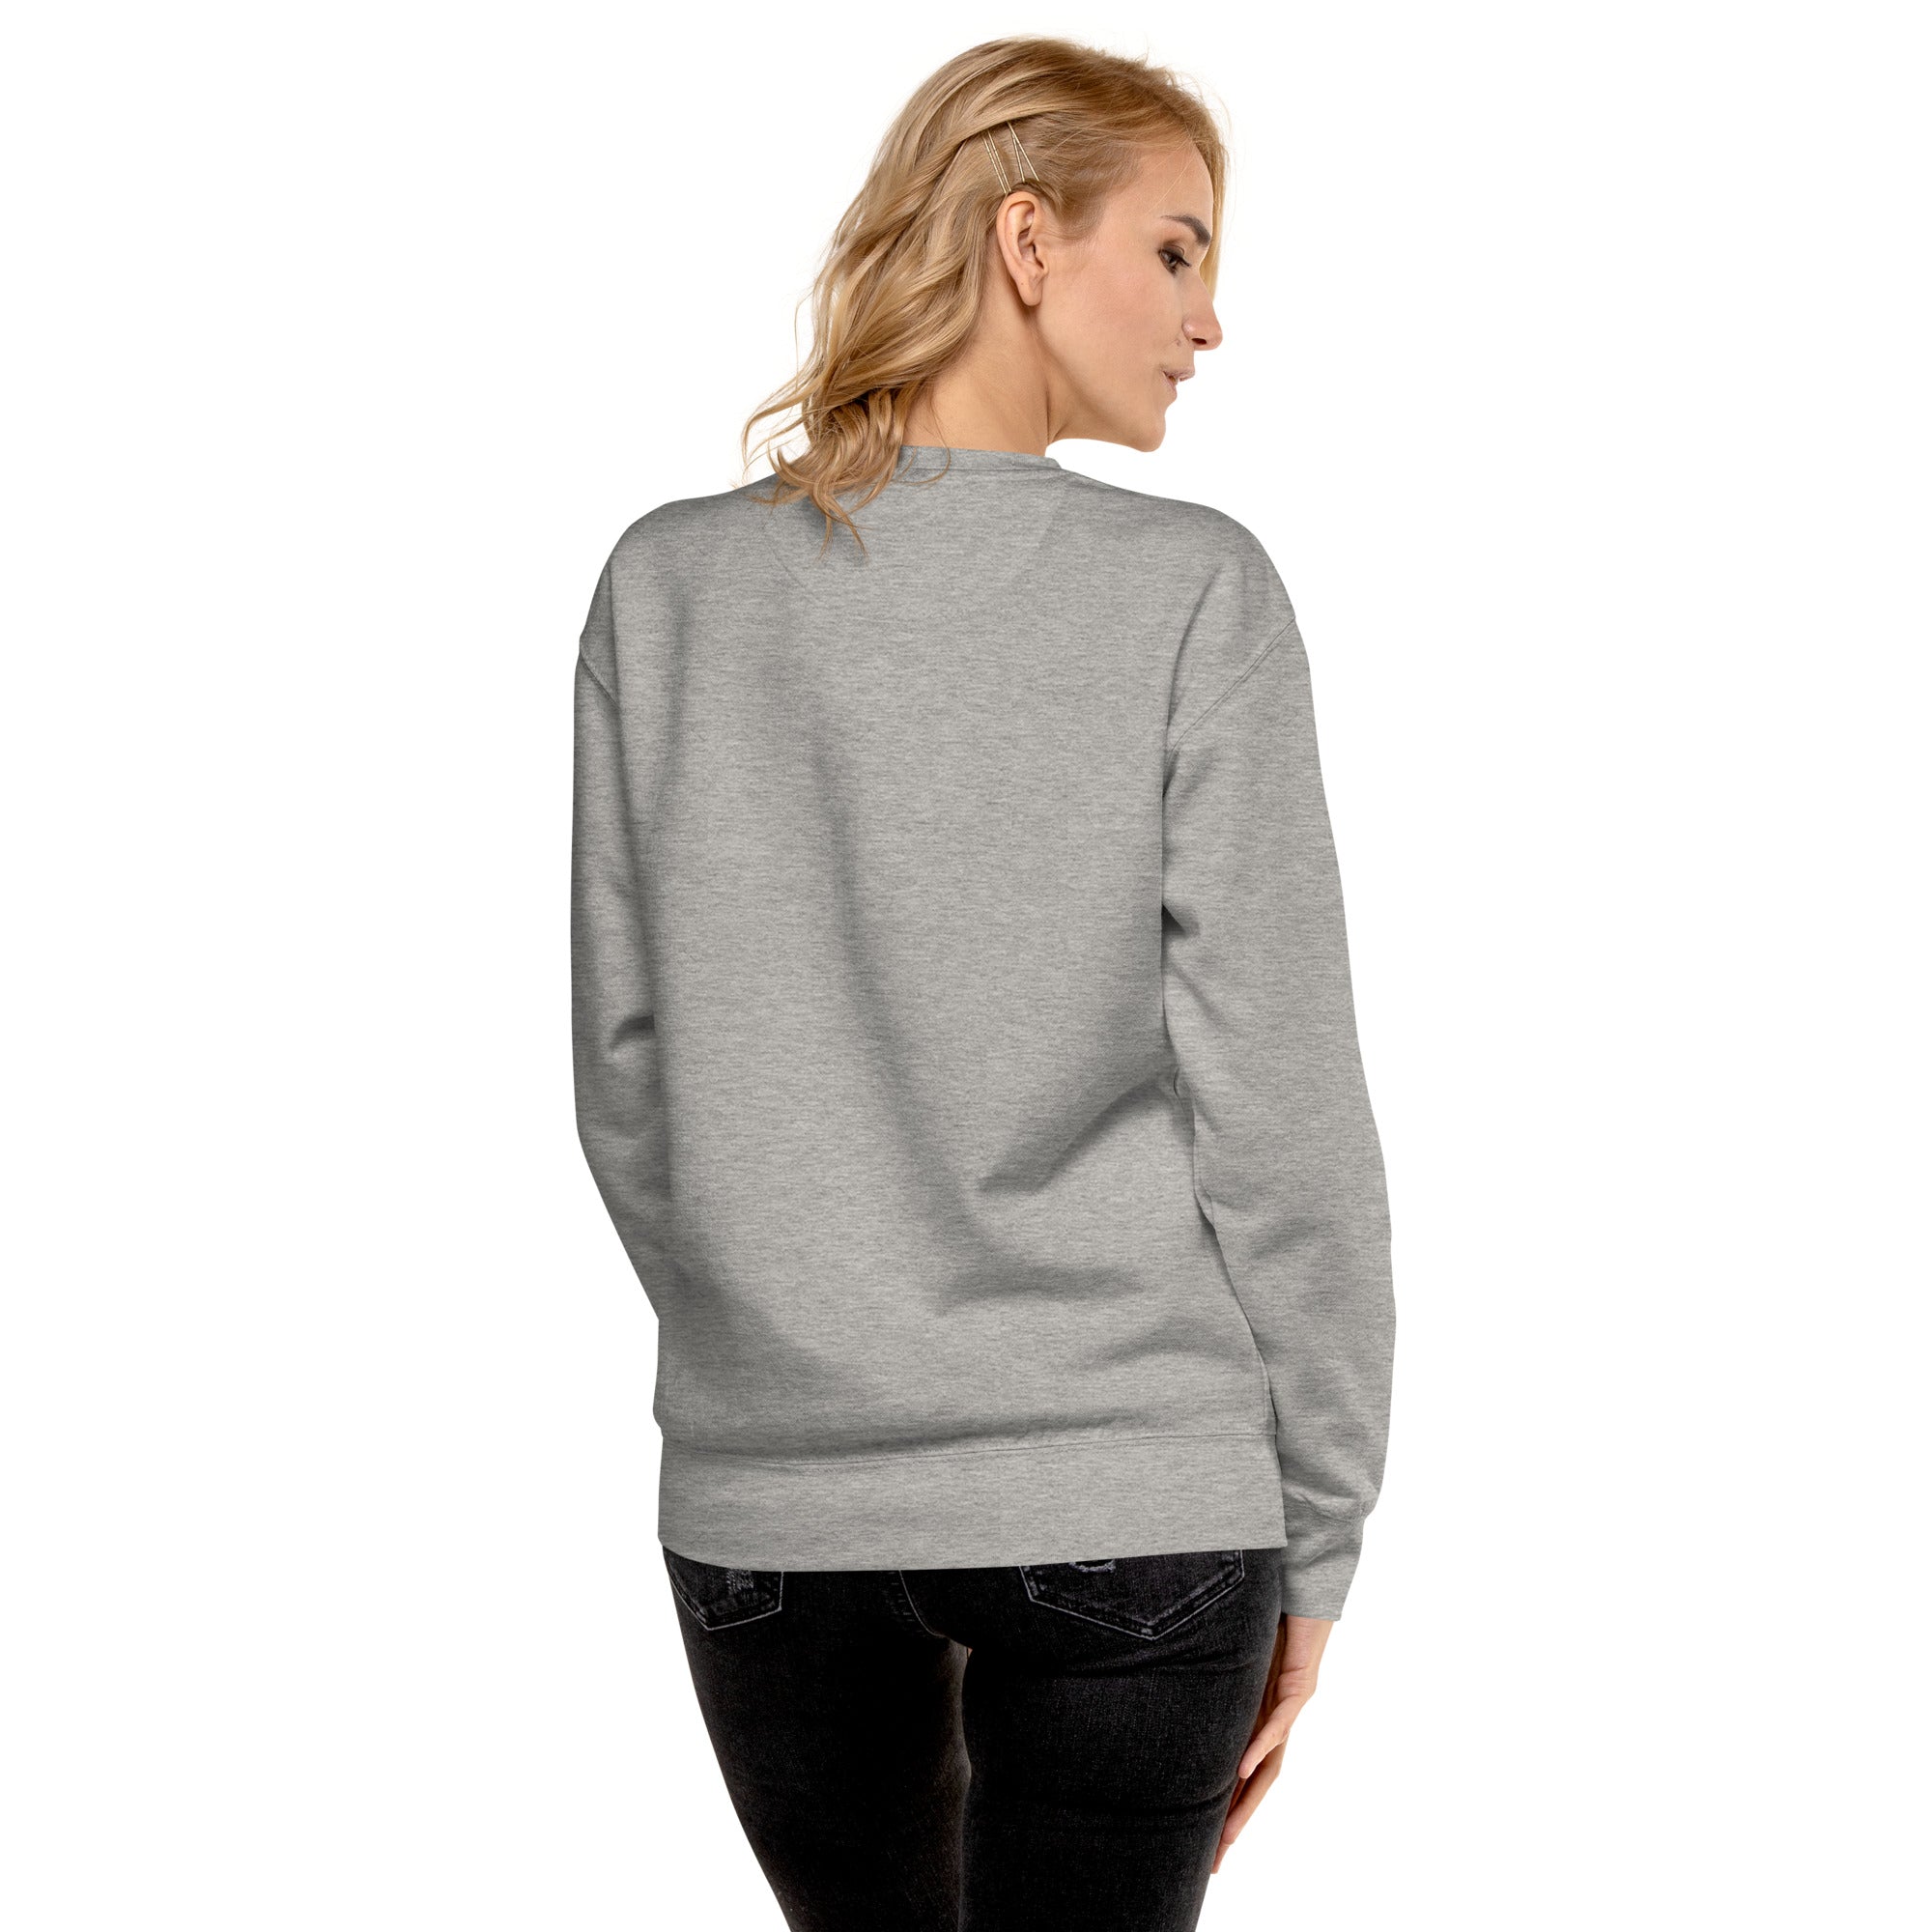 Unisex Premium Sweatshirt Love Instructor large embroidered pattern